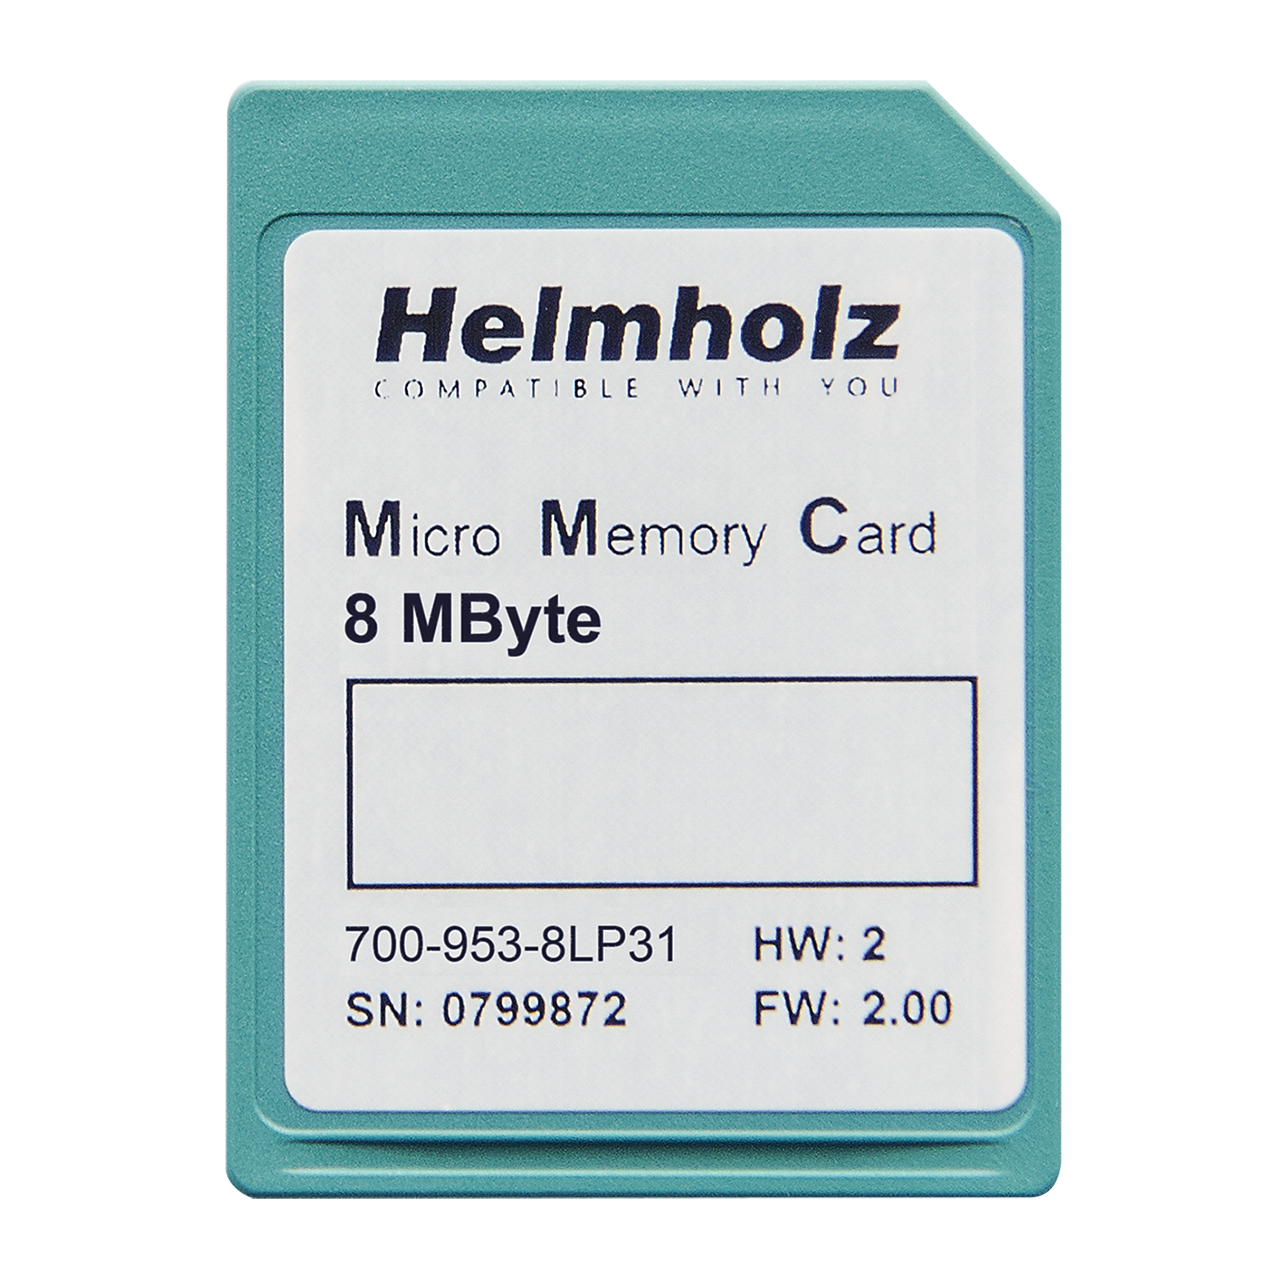 Helmholz Micro Tarjeta de Memoria, 8 MByte 700-953-8LP31